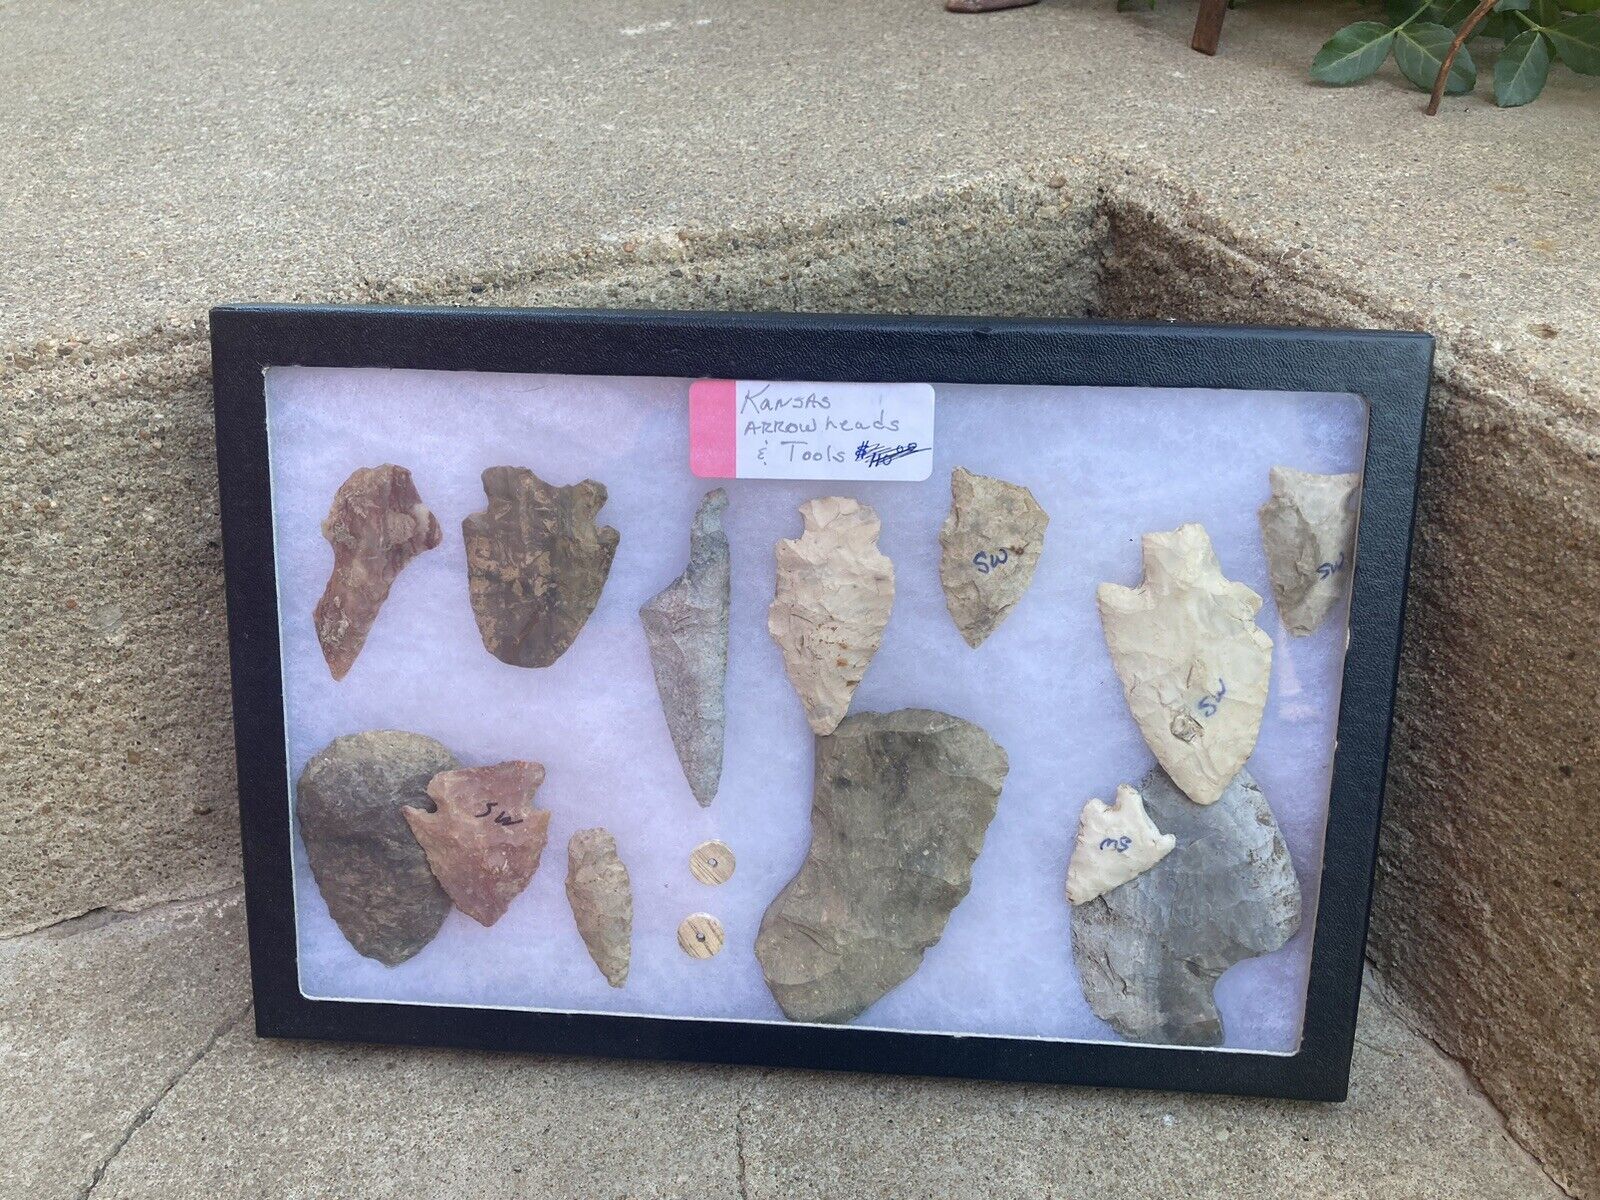 Native American Indian Stone Artifacts Arrowhead Tools Flint Scraper Lot Kansas